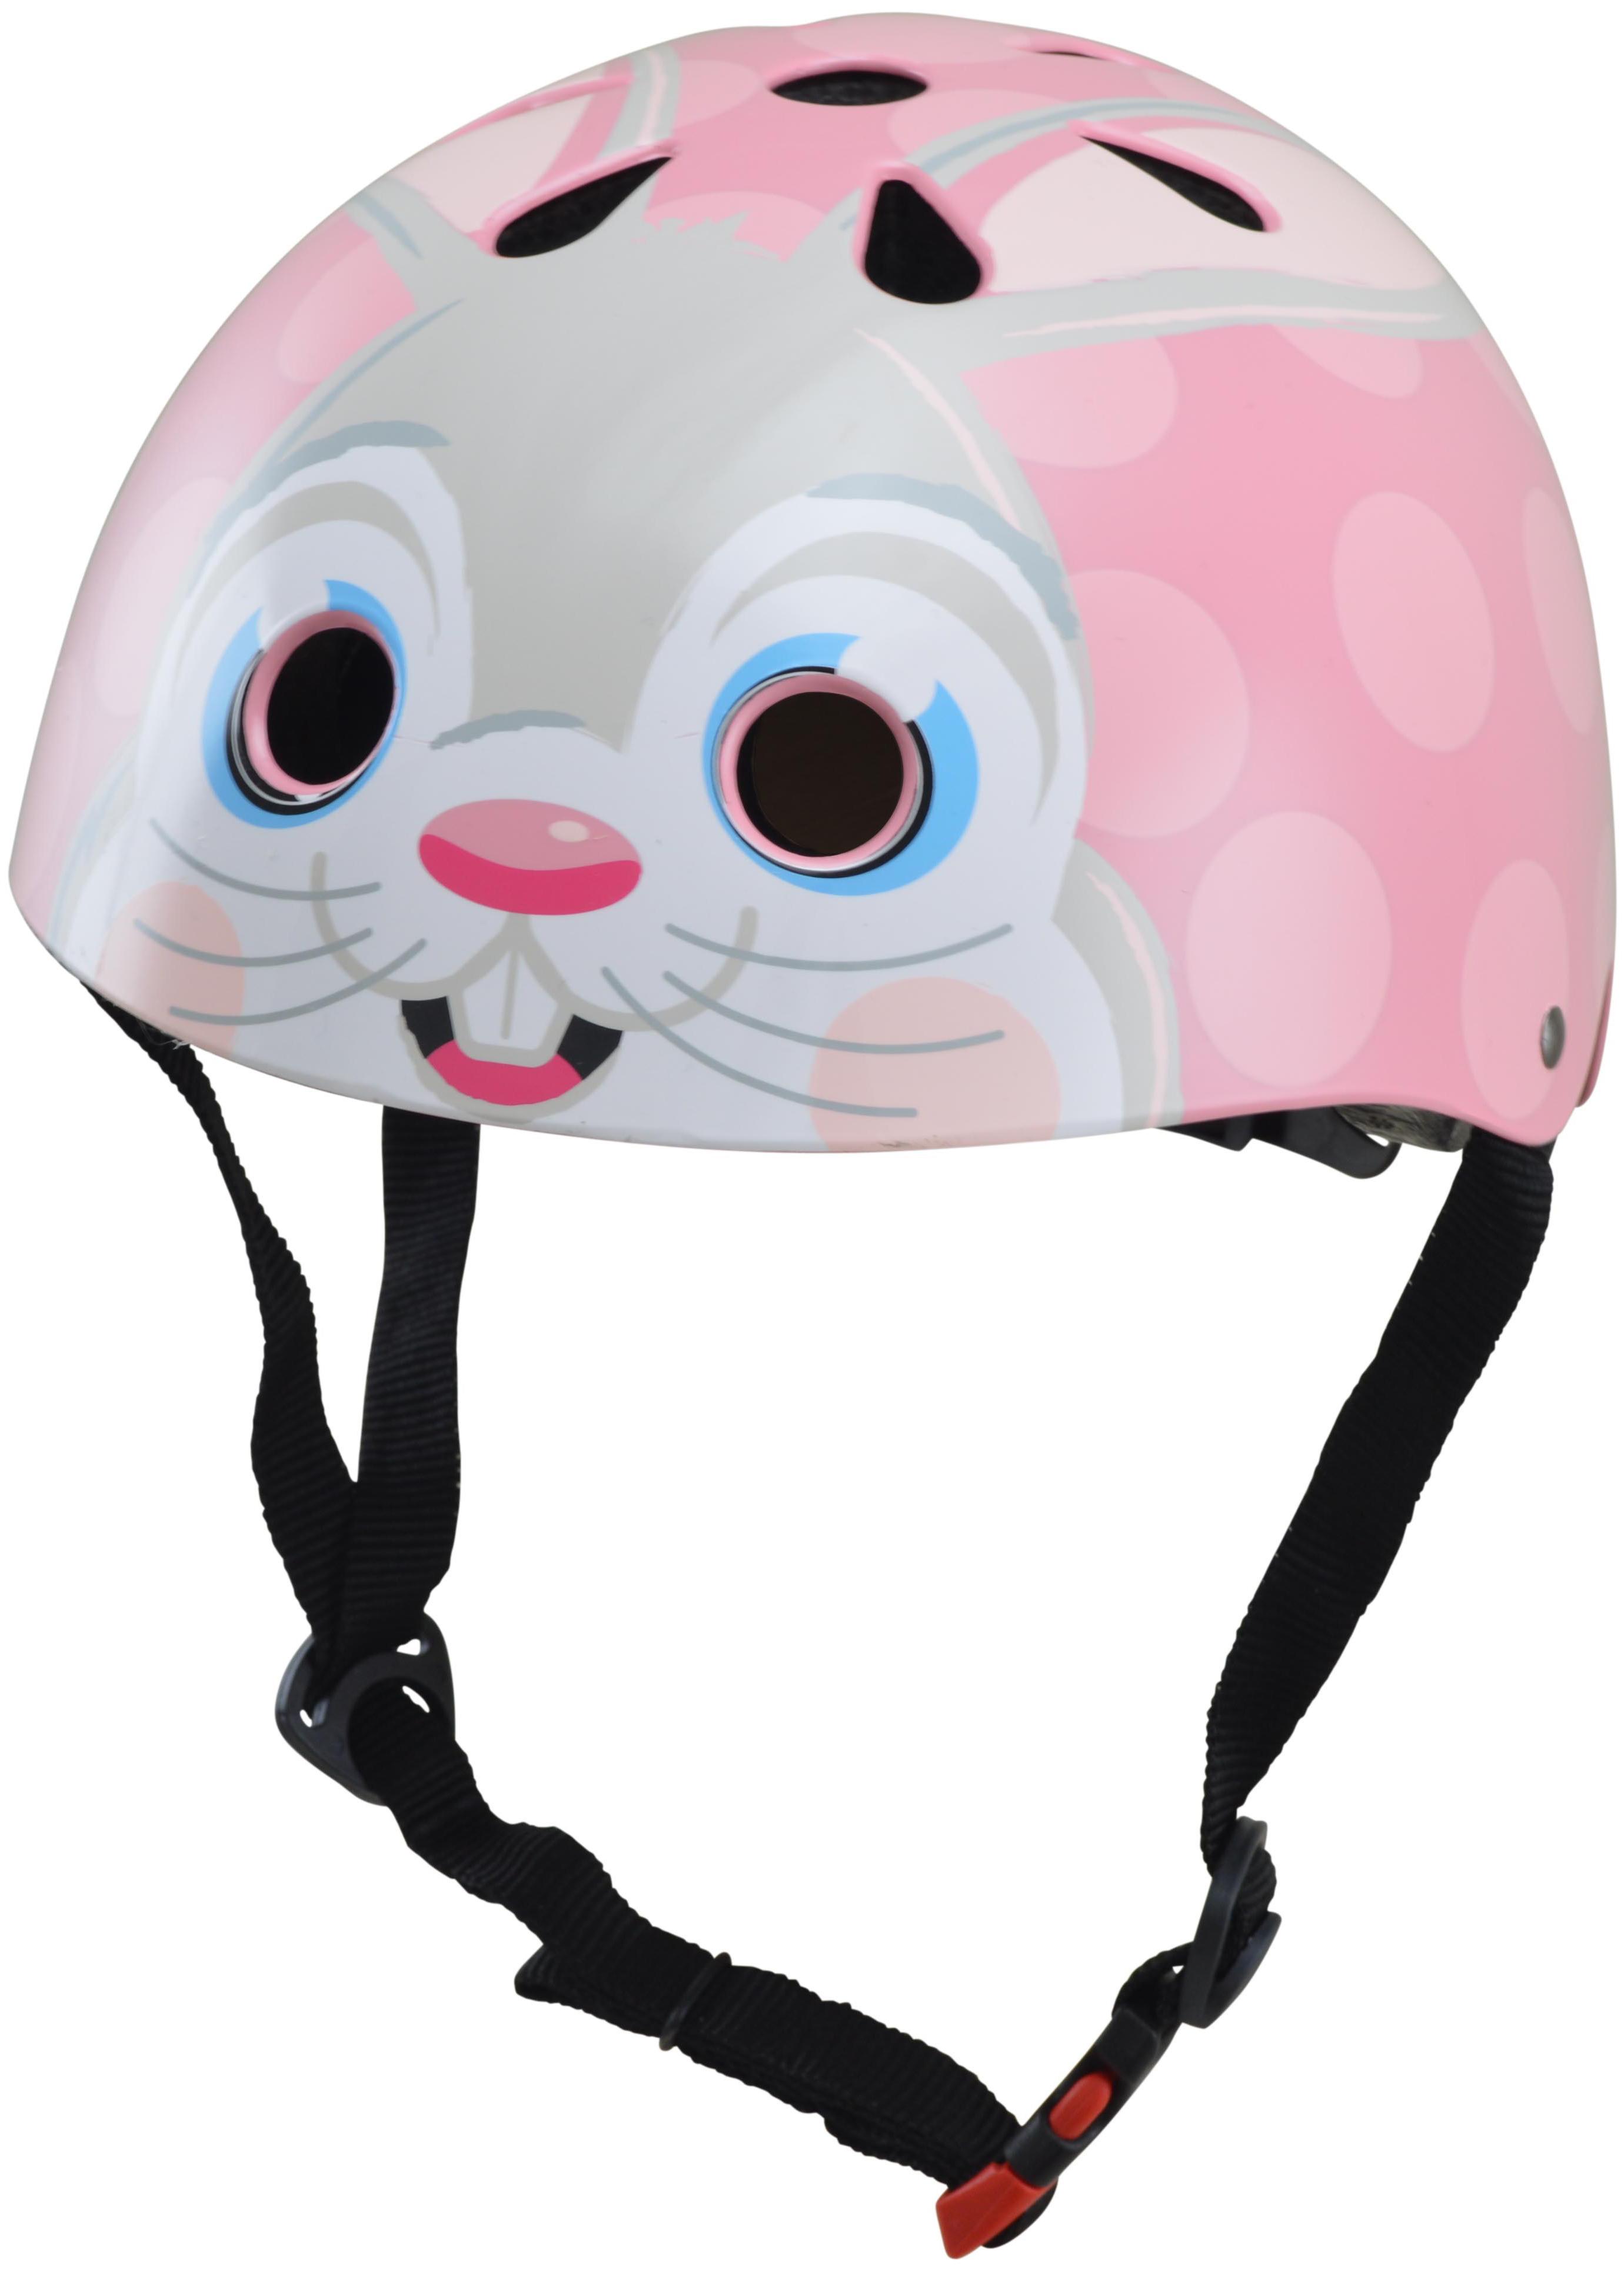 Kiddimoto Bunny Helmet - Medium